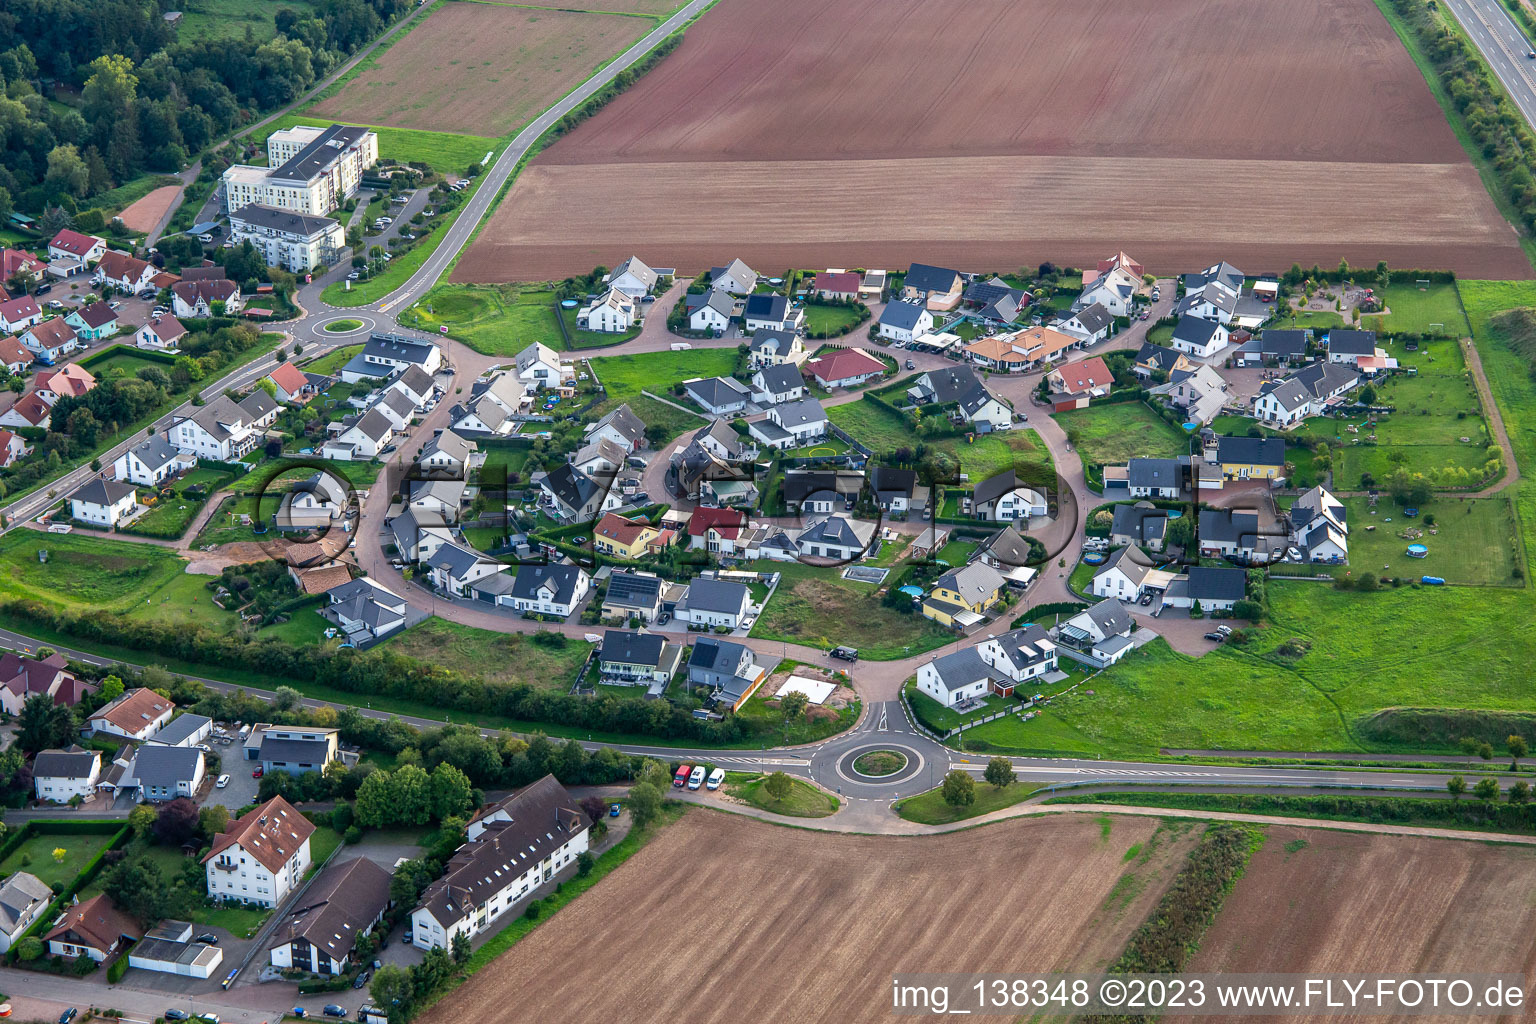 New development area Burgunderstr in Rüdesheim in the state Rhineland-Palatinate, Germany